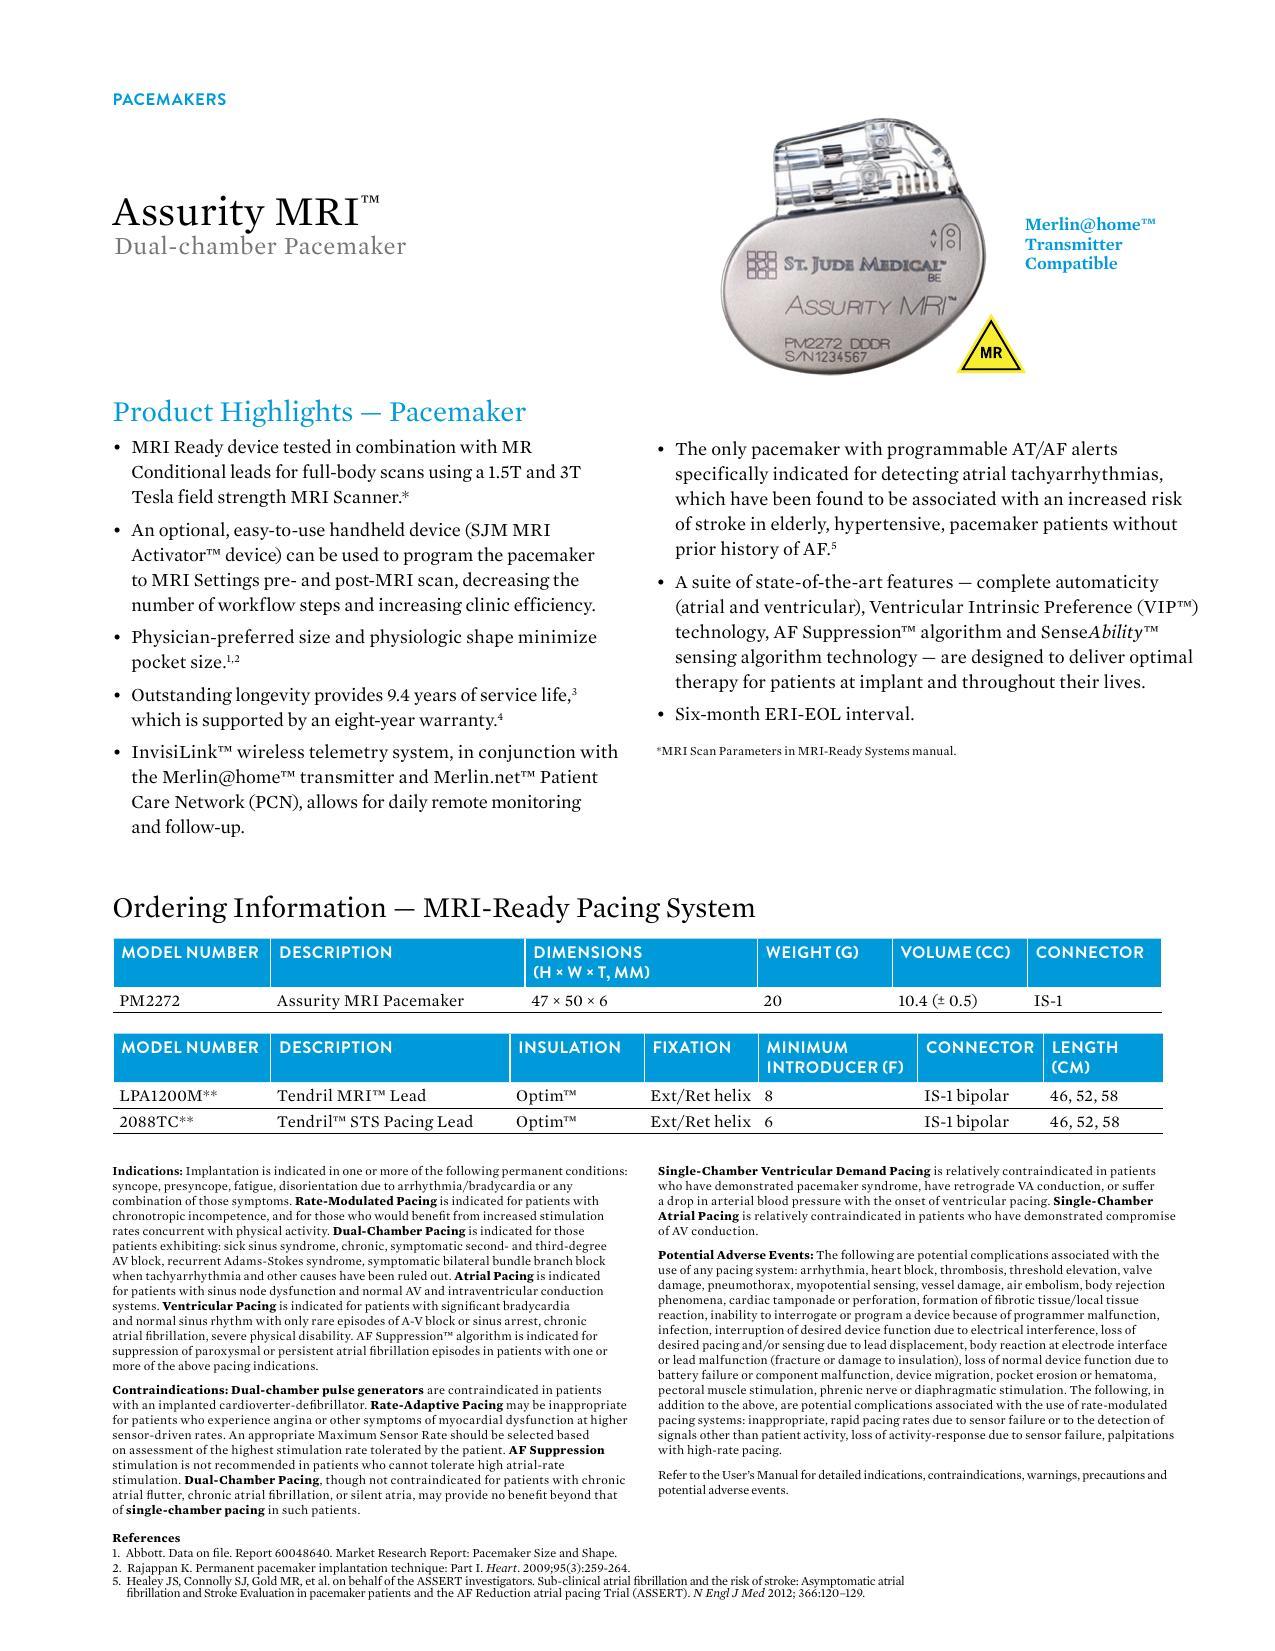 assurity-mri-dual-chamber-pacemaker-user-manual.pdf